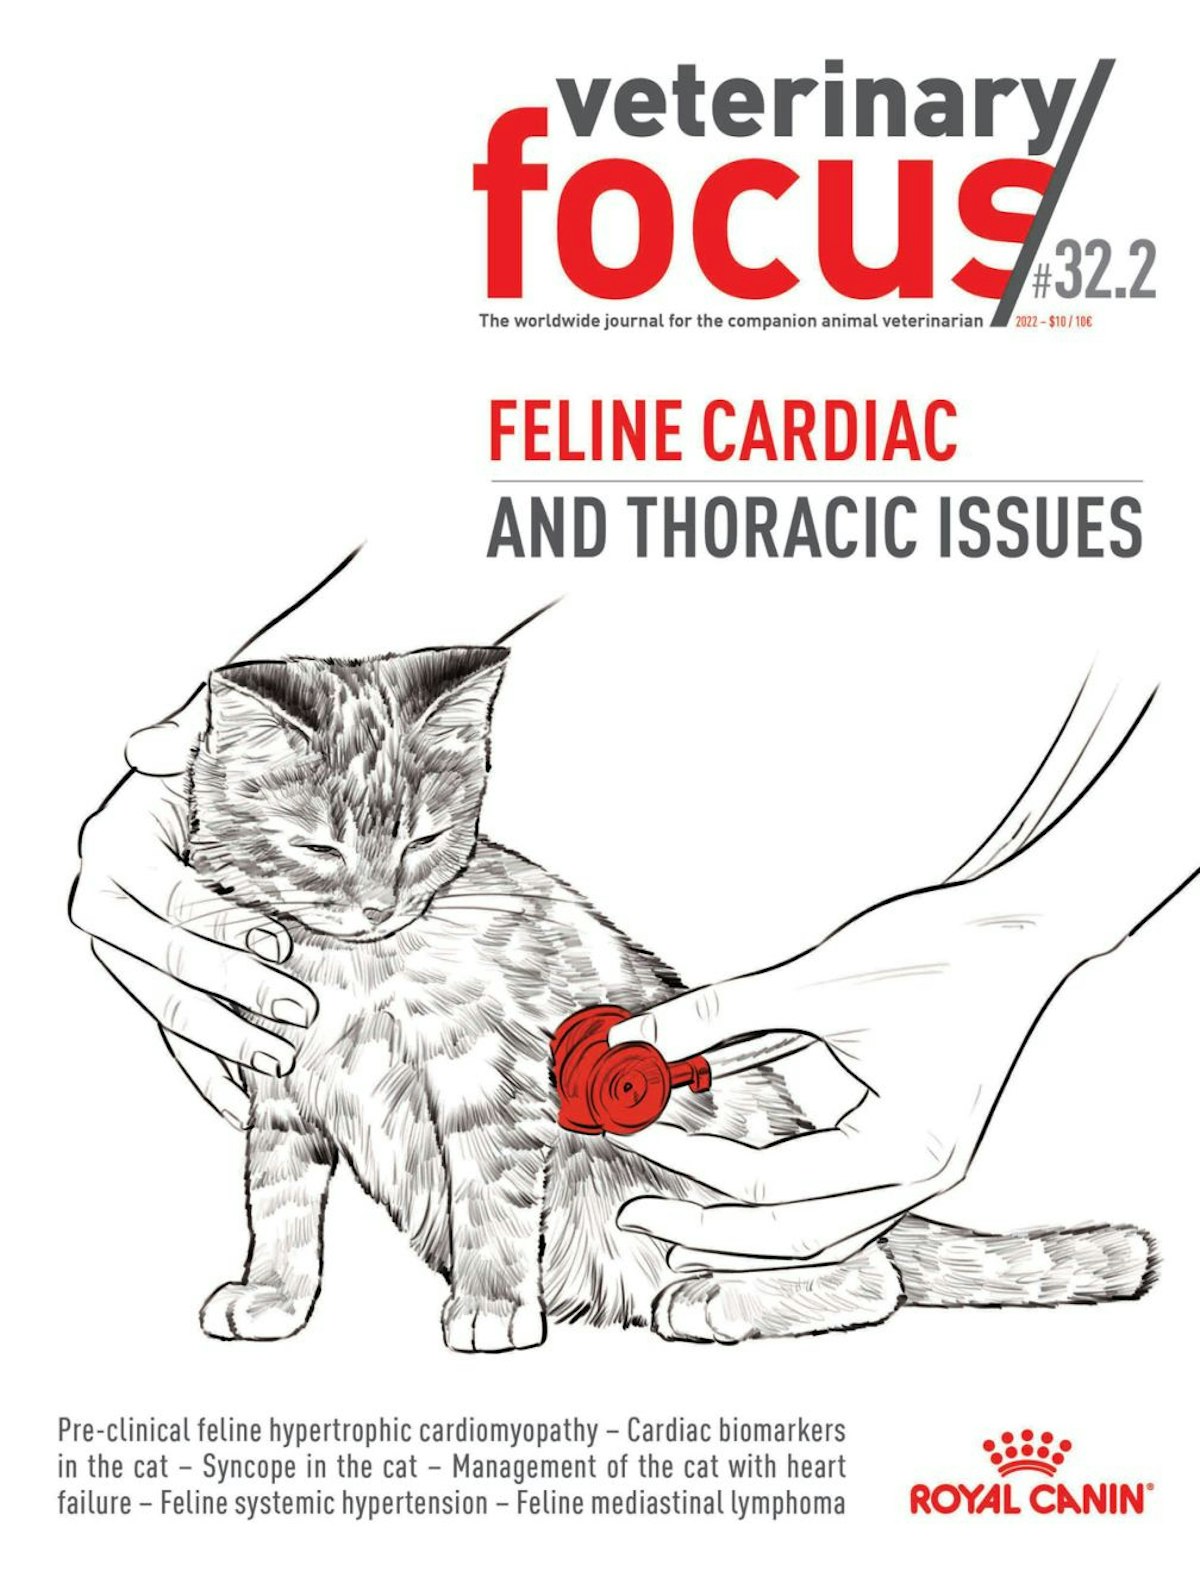 Feline cardiac and thoracic issues